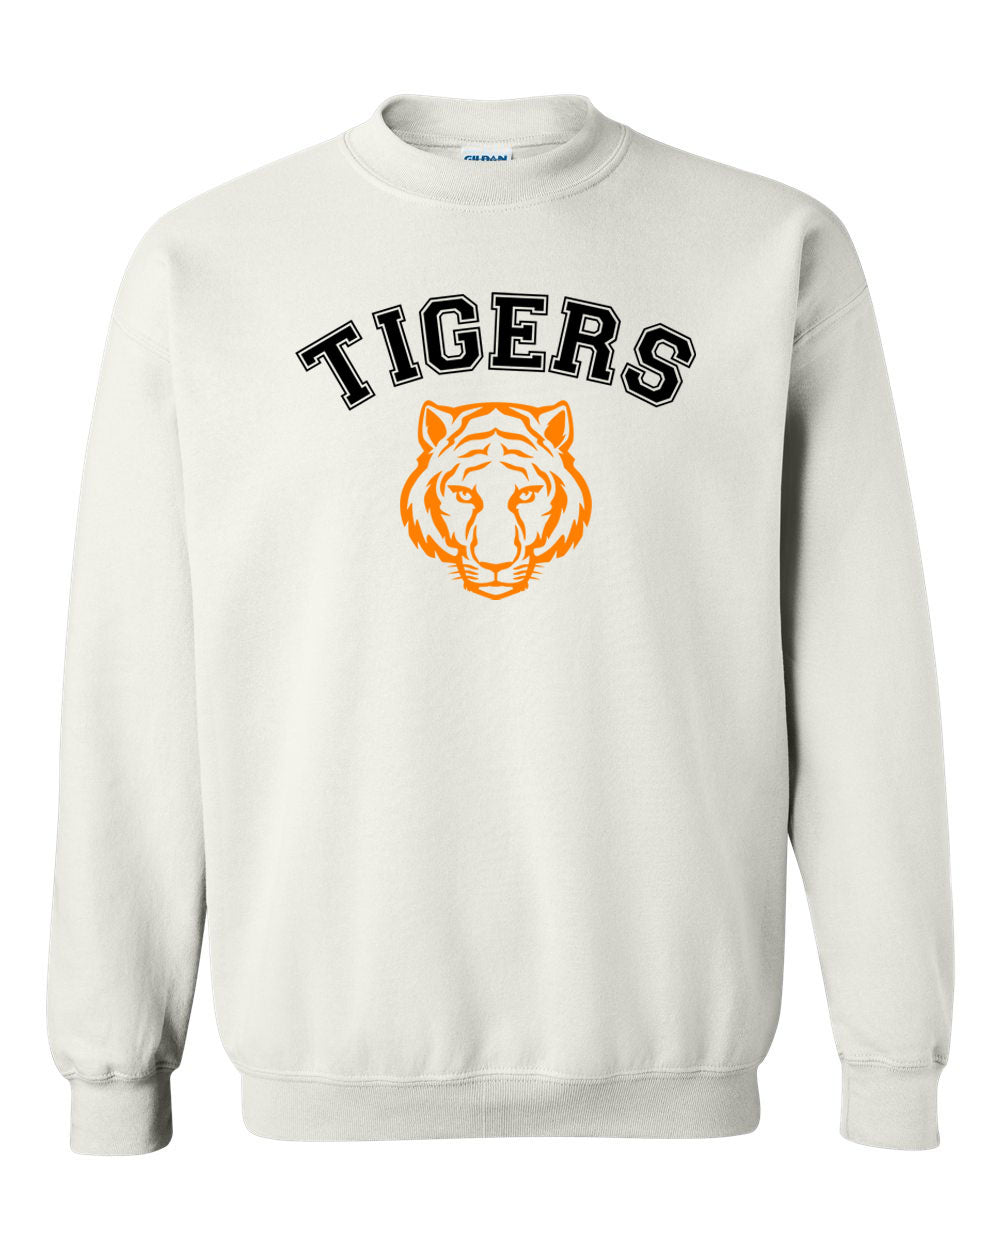 Lafayette Tiger non hooded sweatshirt